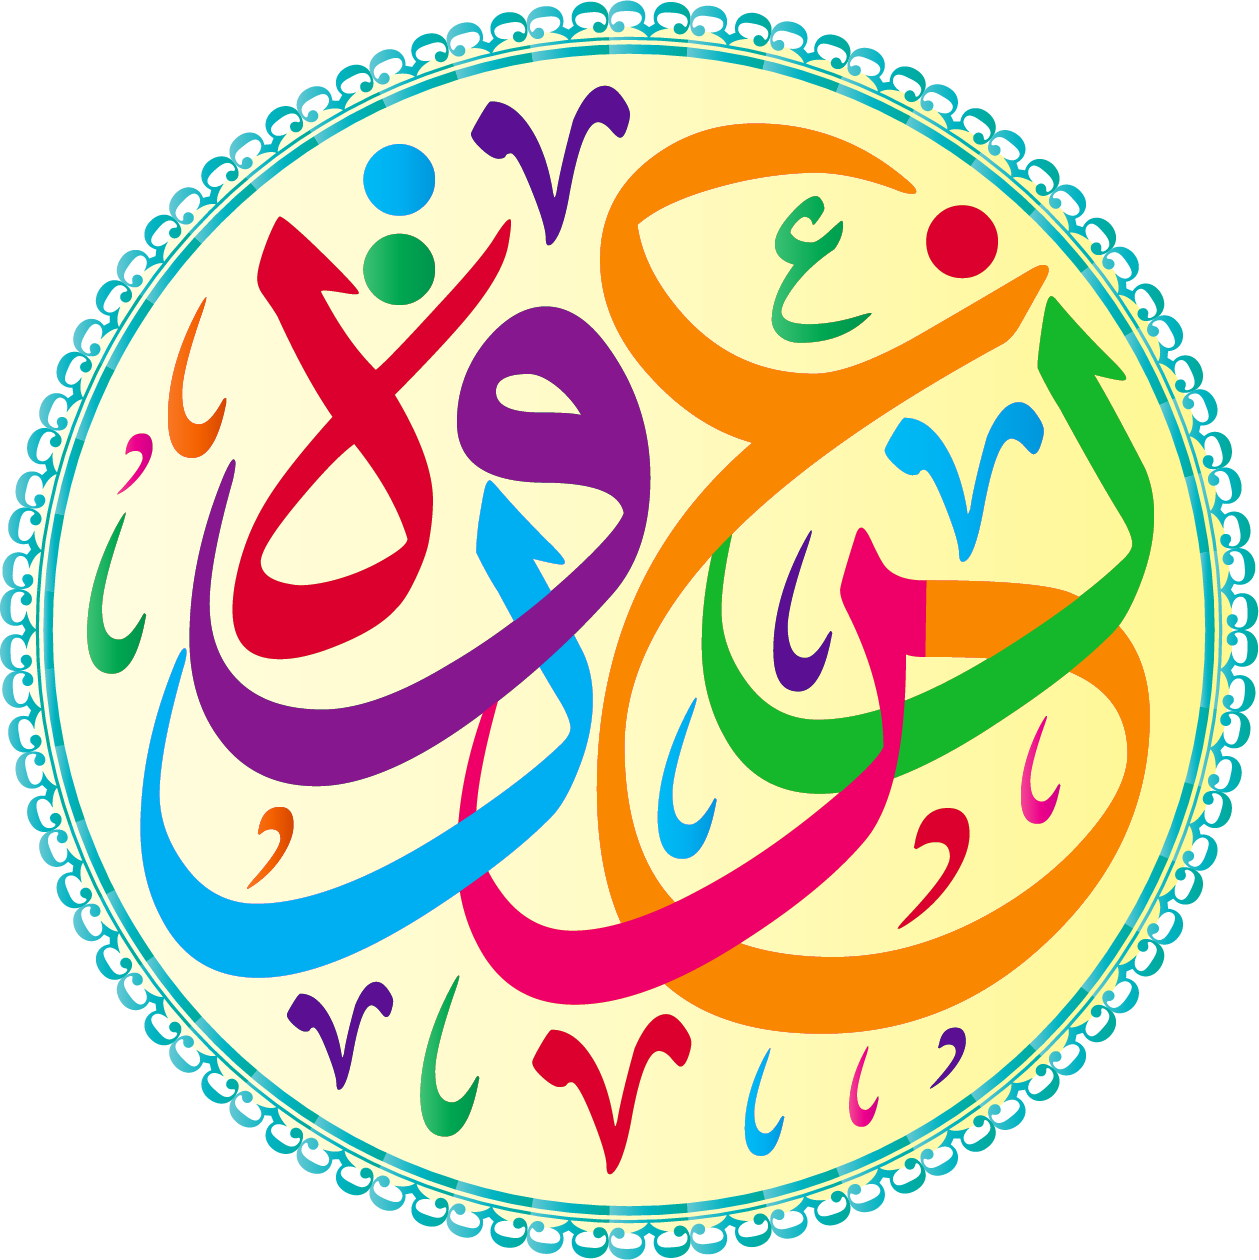 zaaroura icon vector color download free #darrati #logo #jbala #svg #eps #psd #ai #vector #color #free #art #vectors #country #icon #logos #icons #flags #photoshop #illustrator #maroc #design #web #shapes #button #larache #buttons #zaaroura #science #morocco